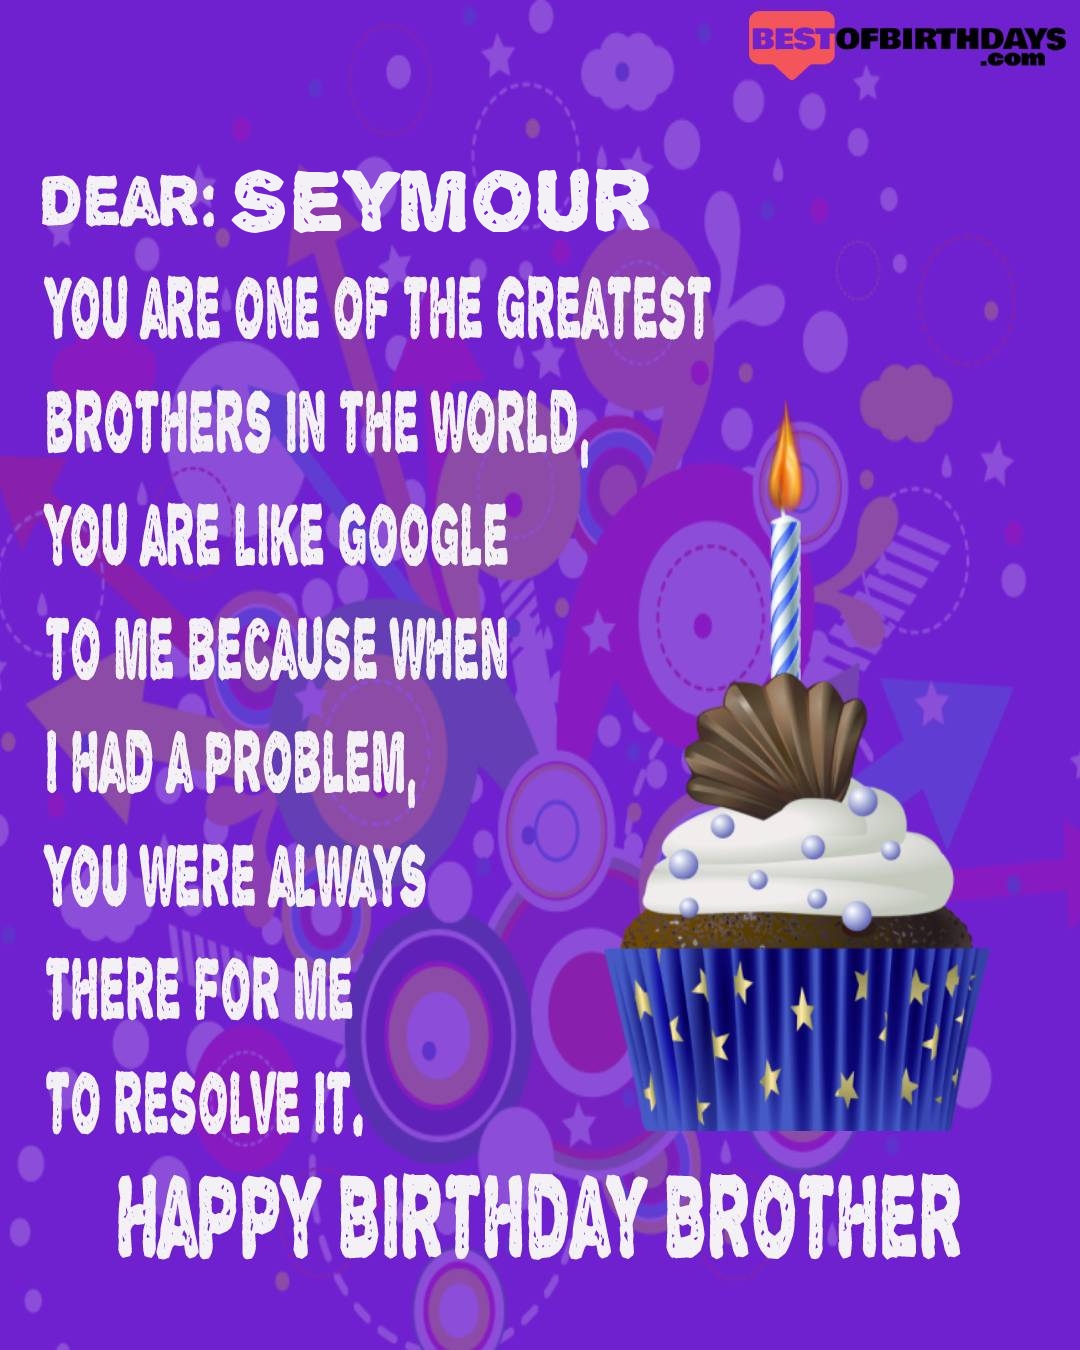 Happy birthday seymour bhai brother bro